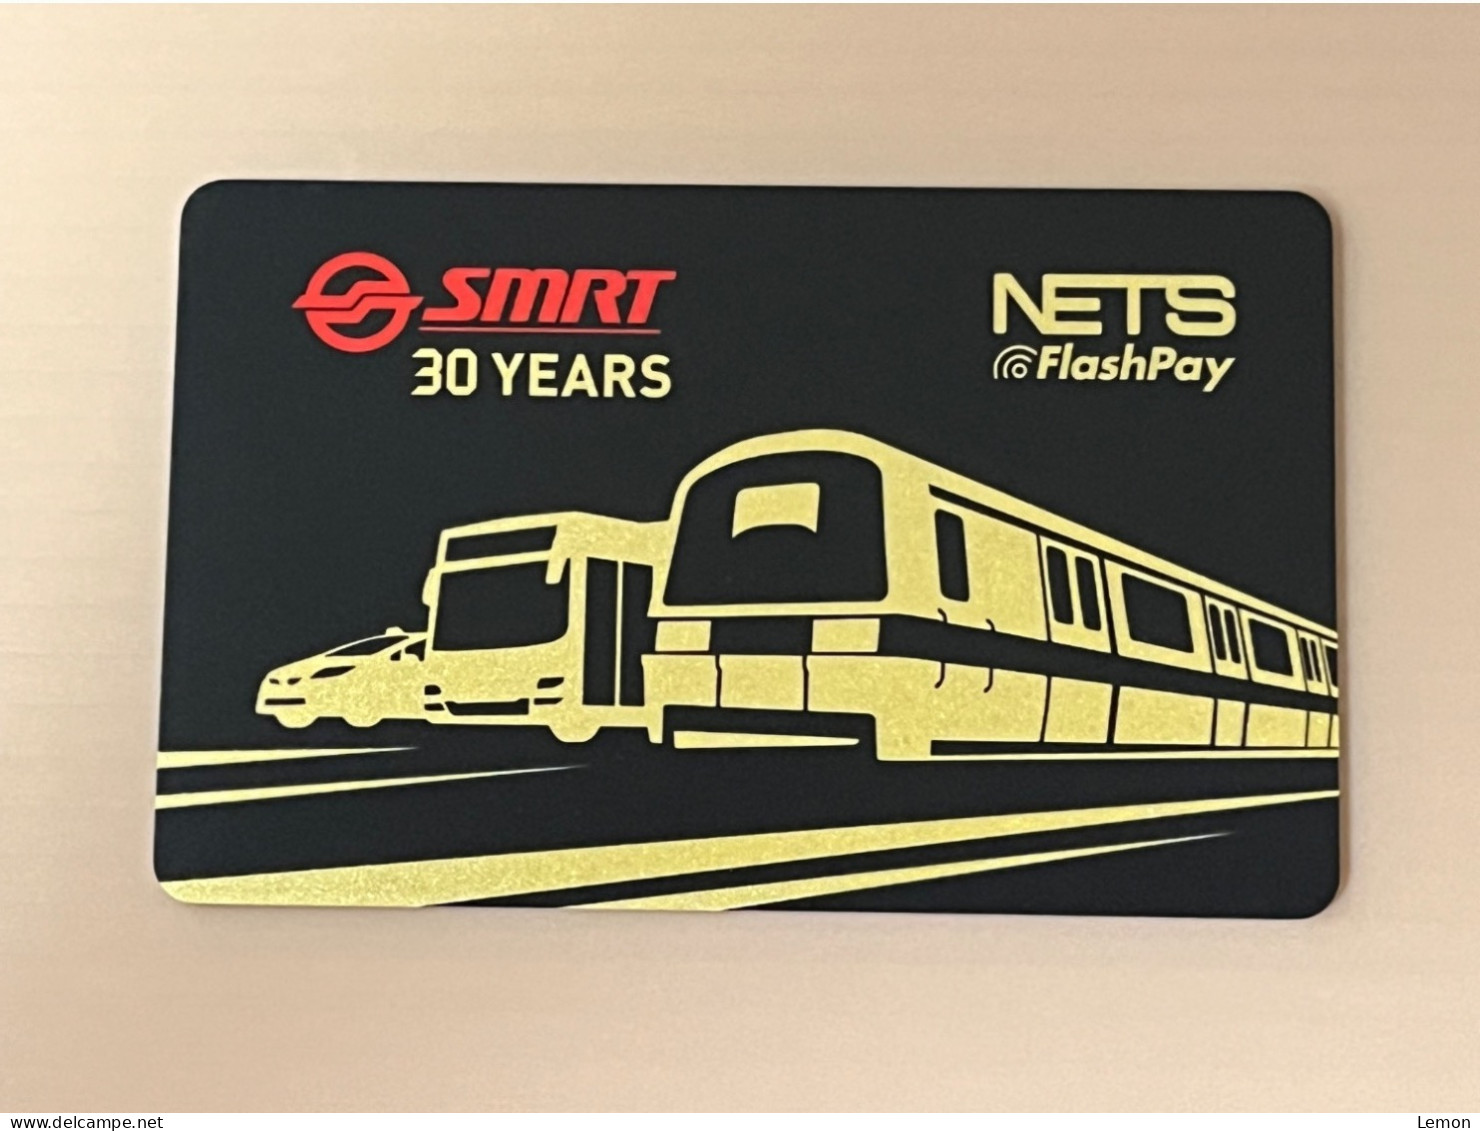 Singapore Nets Flashpay EZ Link Transport Metro Train Subway Card, SMRT 30 Years Gold, Set Of 1 Used Card - Singapour